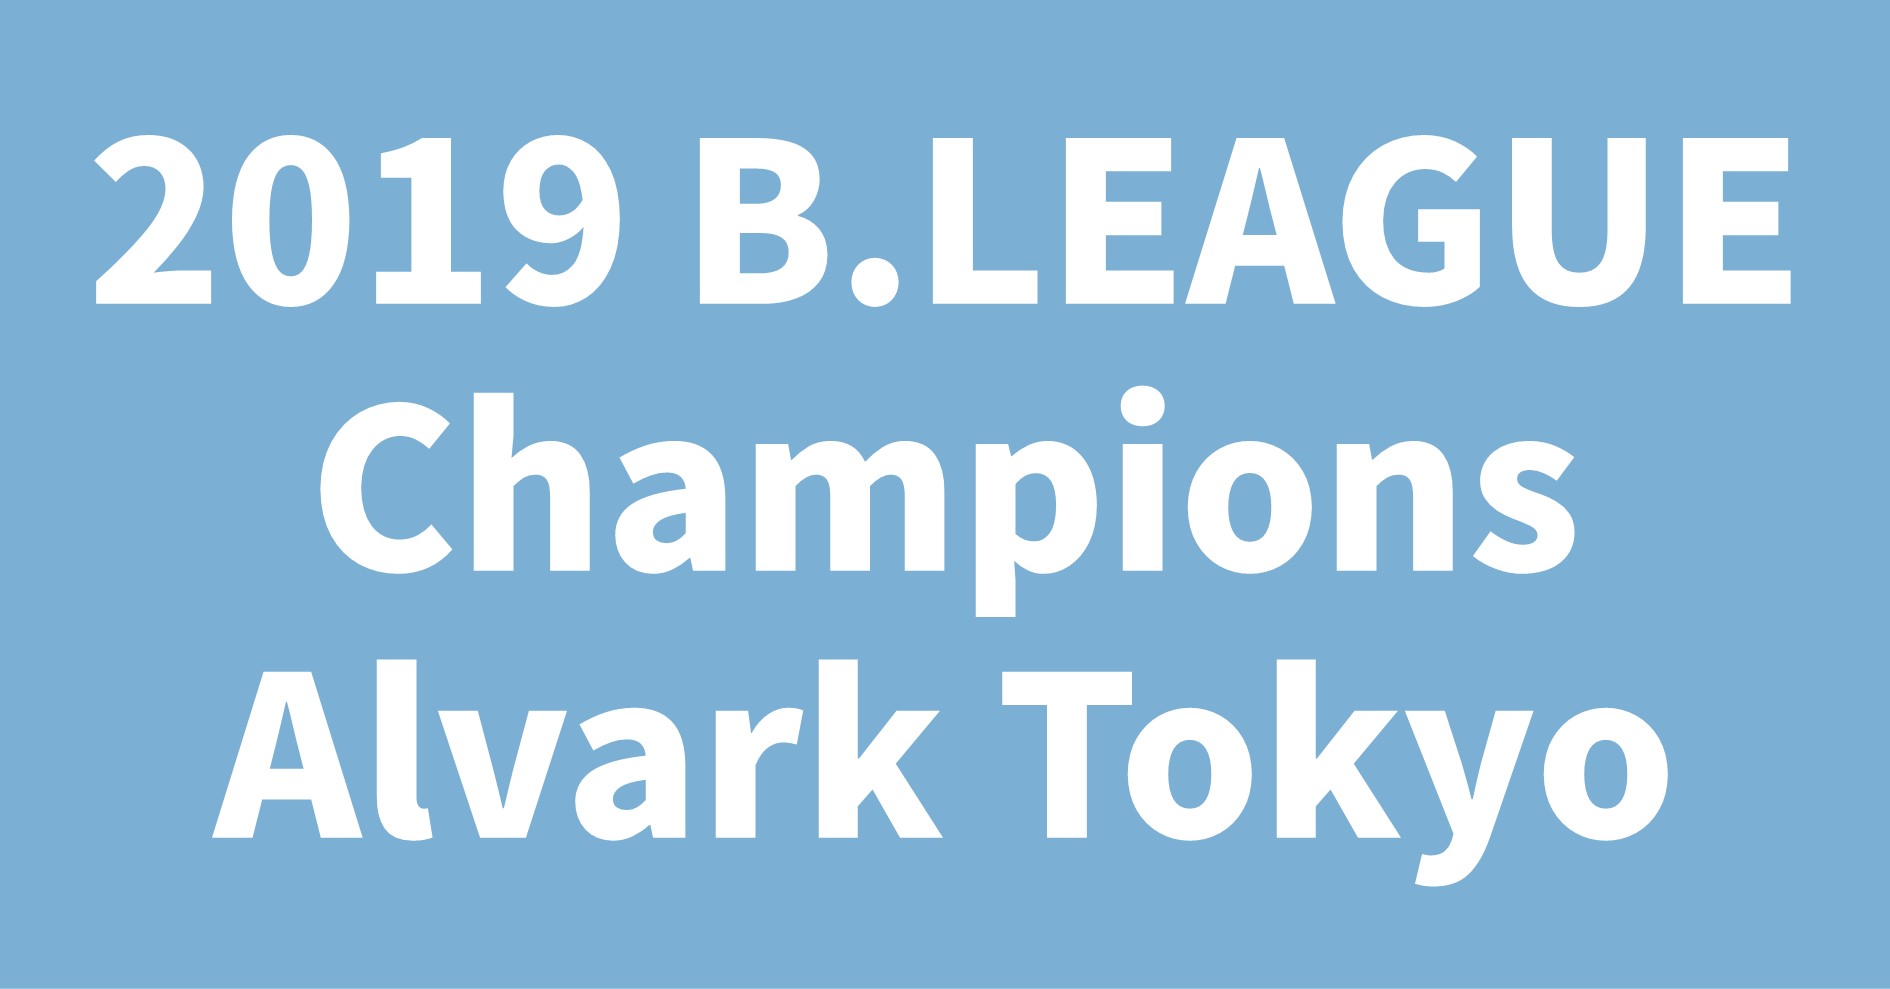 2019 B.LEAGUE Champions Alvark Tokyo